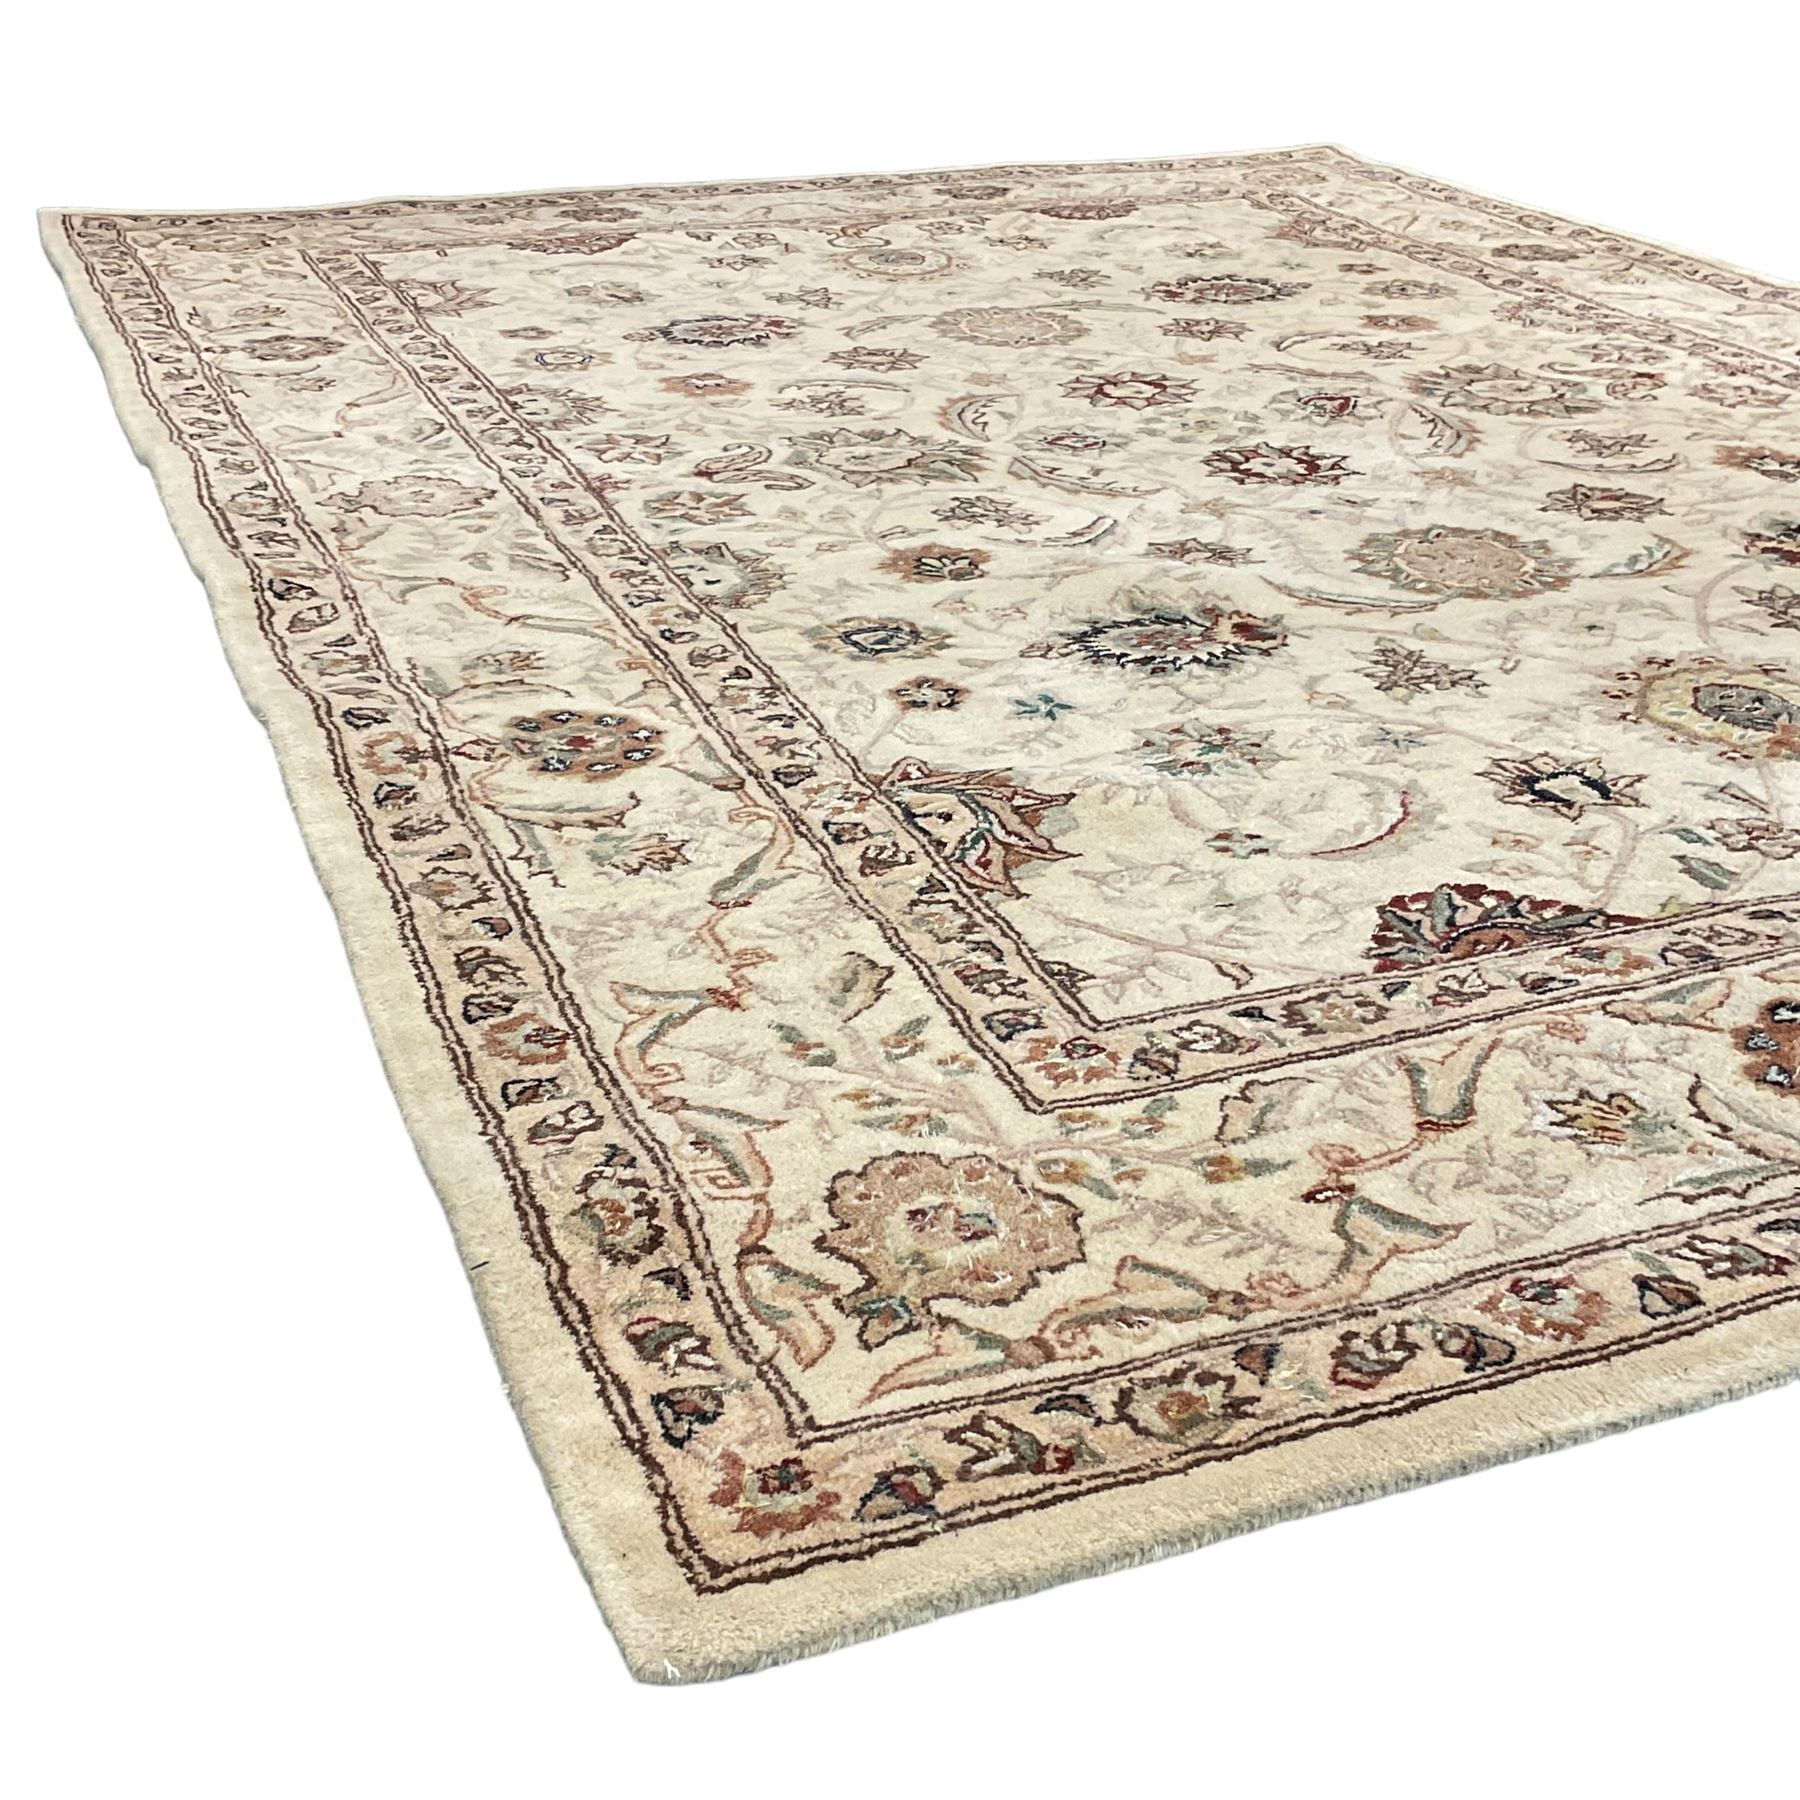 Gooch Carpets - Persian design ivory ground rug - Image 5 of 5